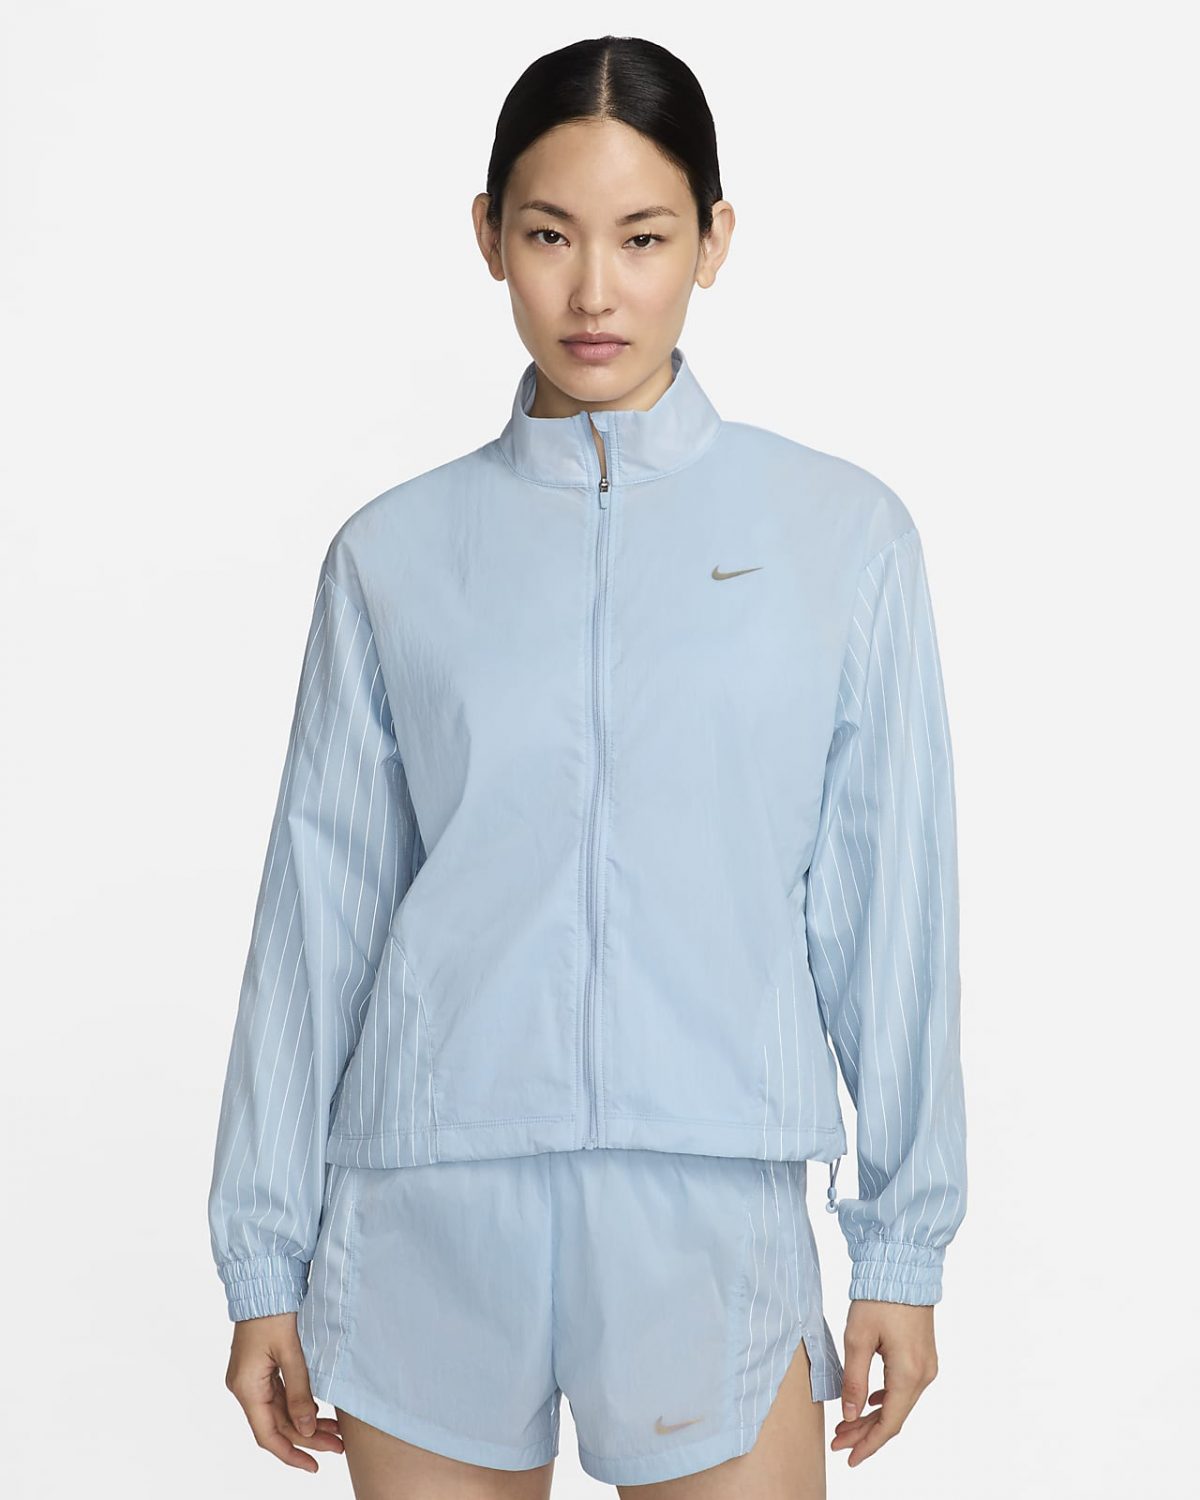 Женская куртка Nike Running Division фото